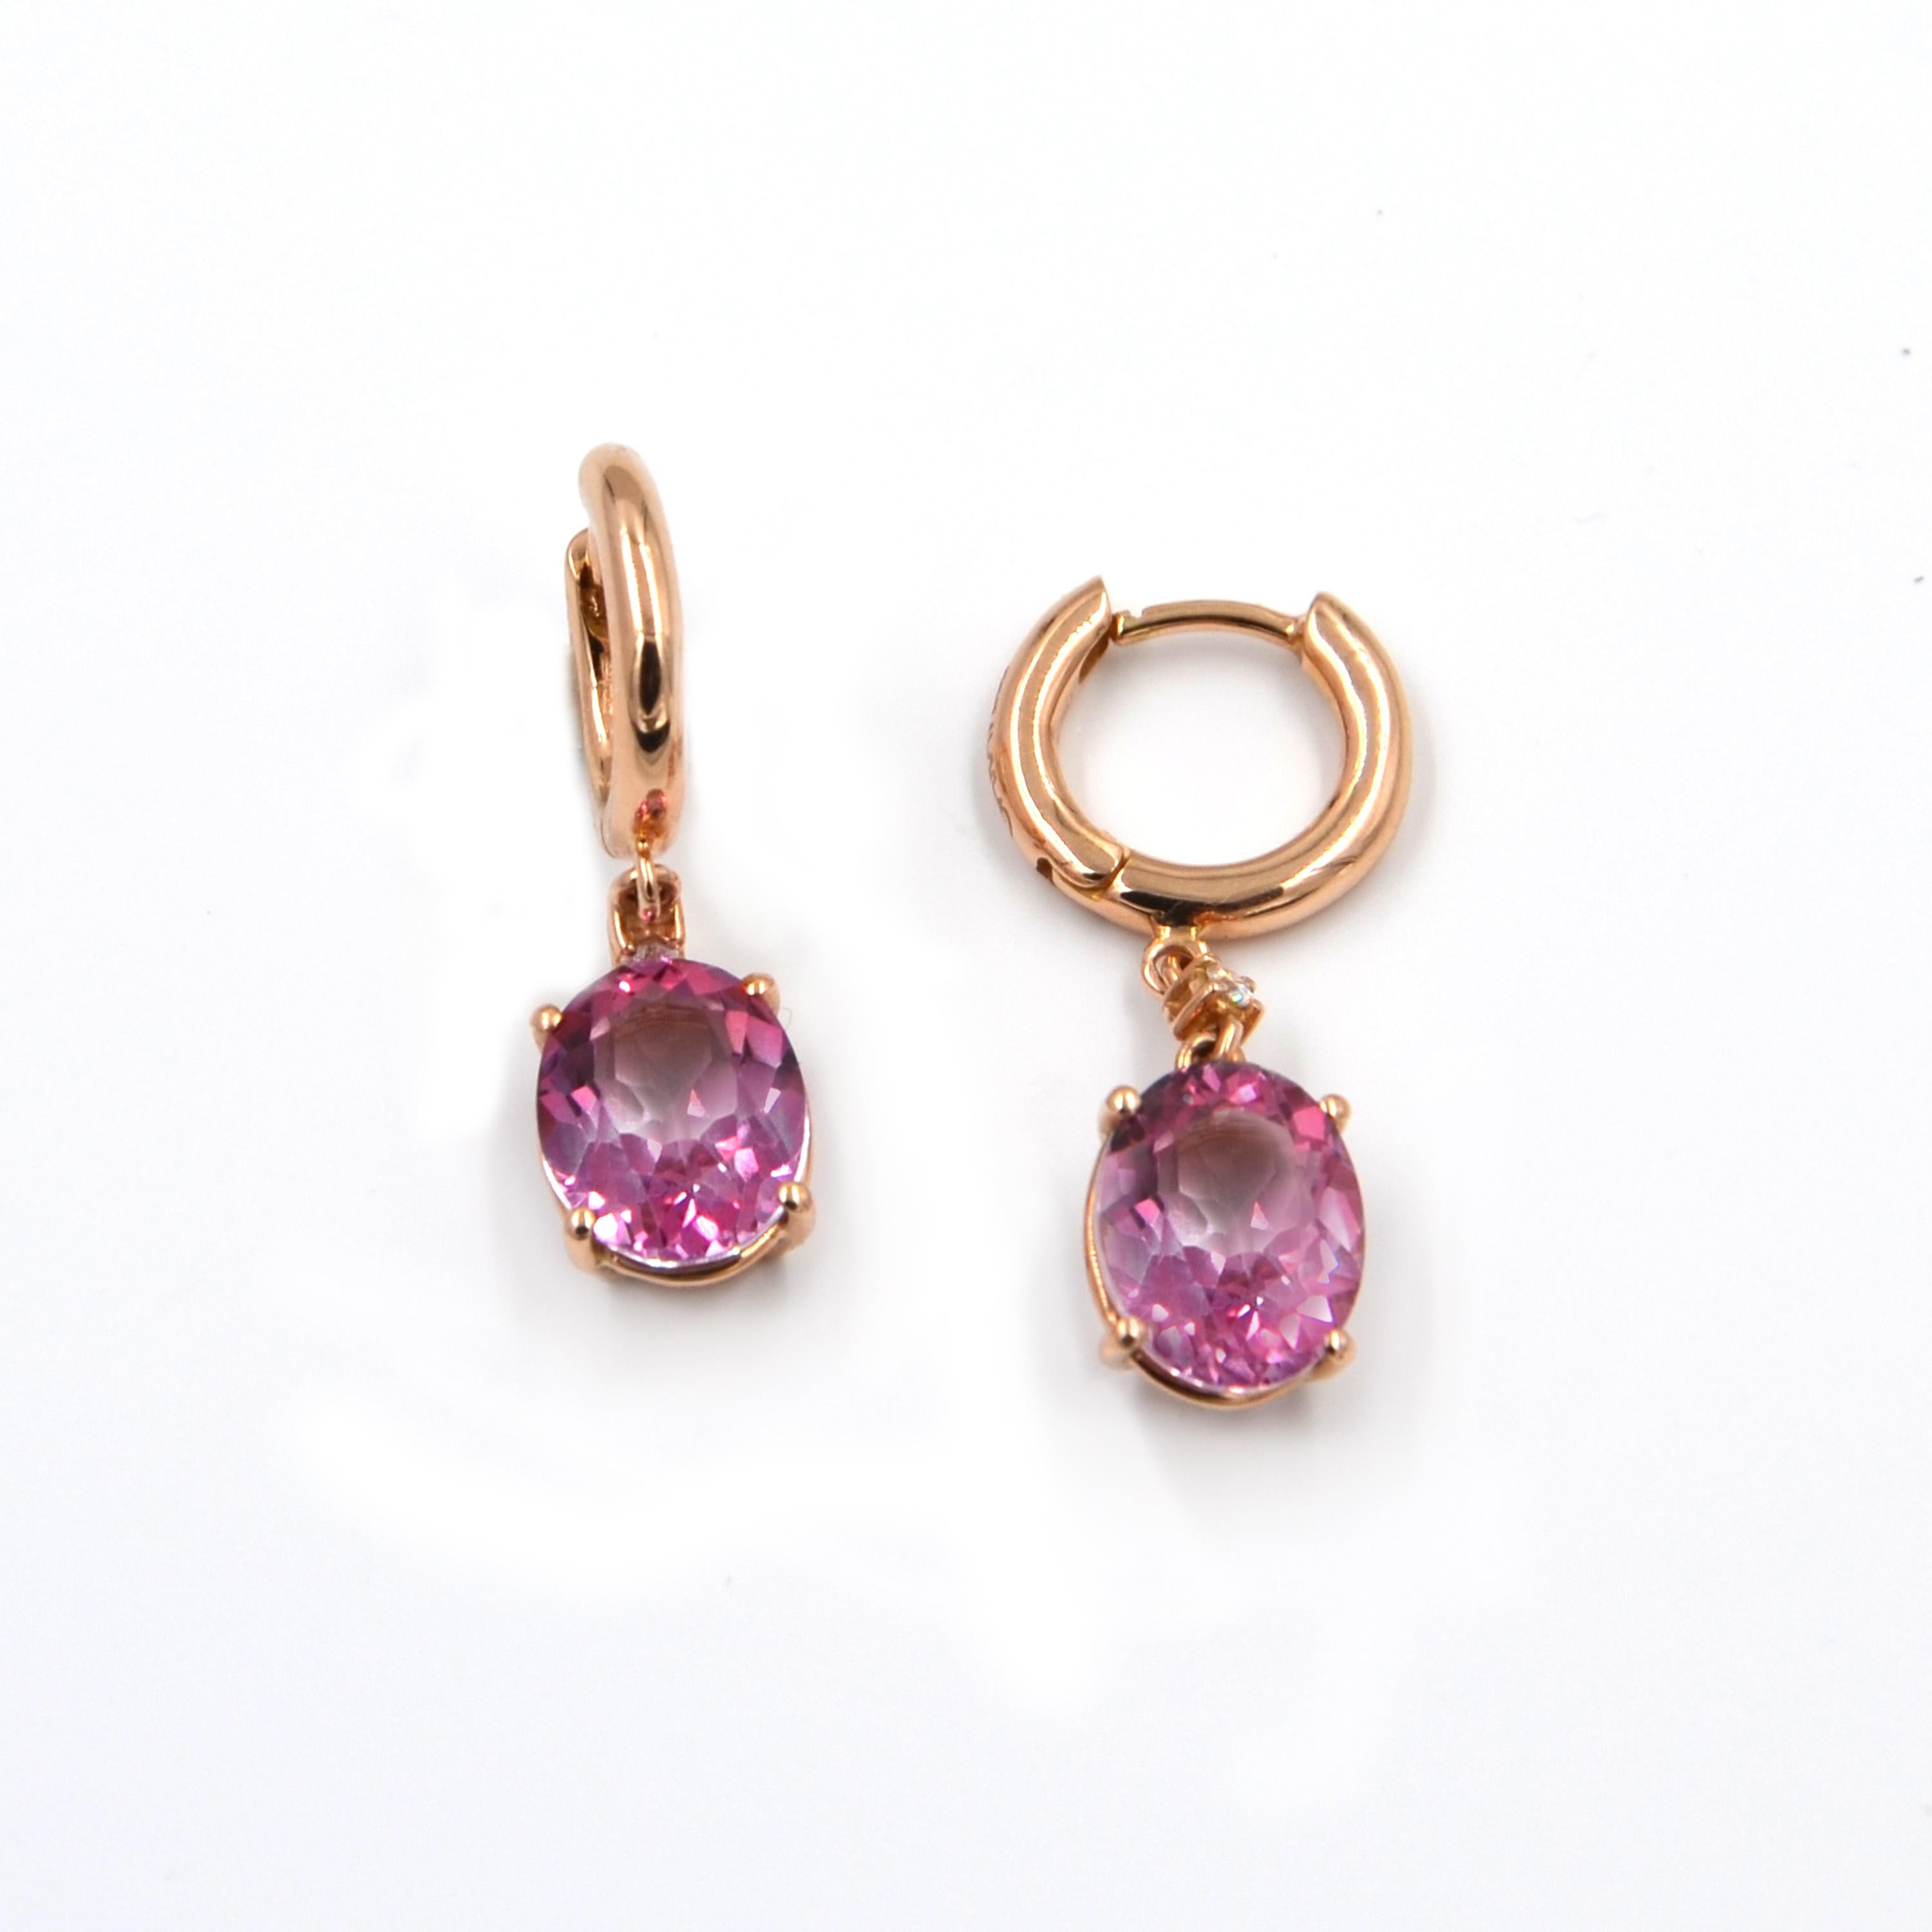 Women's 18 Karat Rose Gold Garavelli Earrings Featuring Pink Topaz and Diamonds